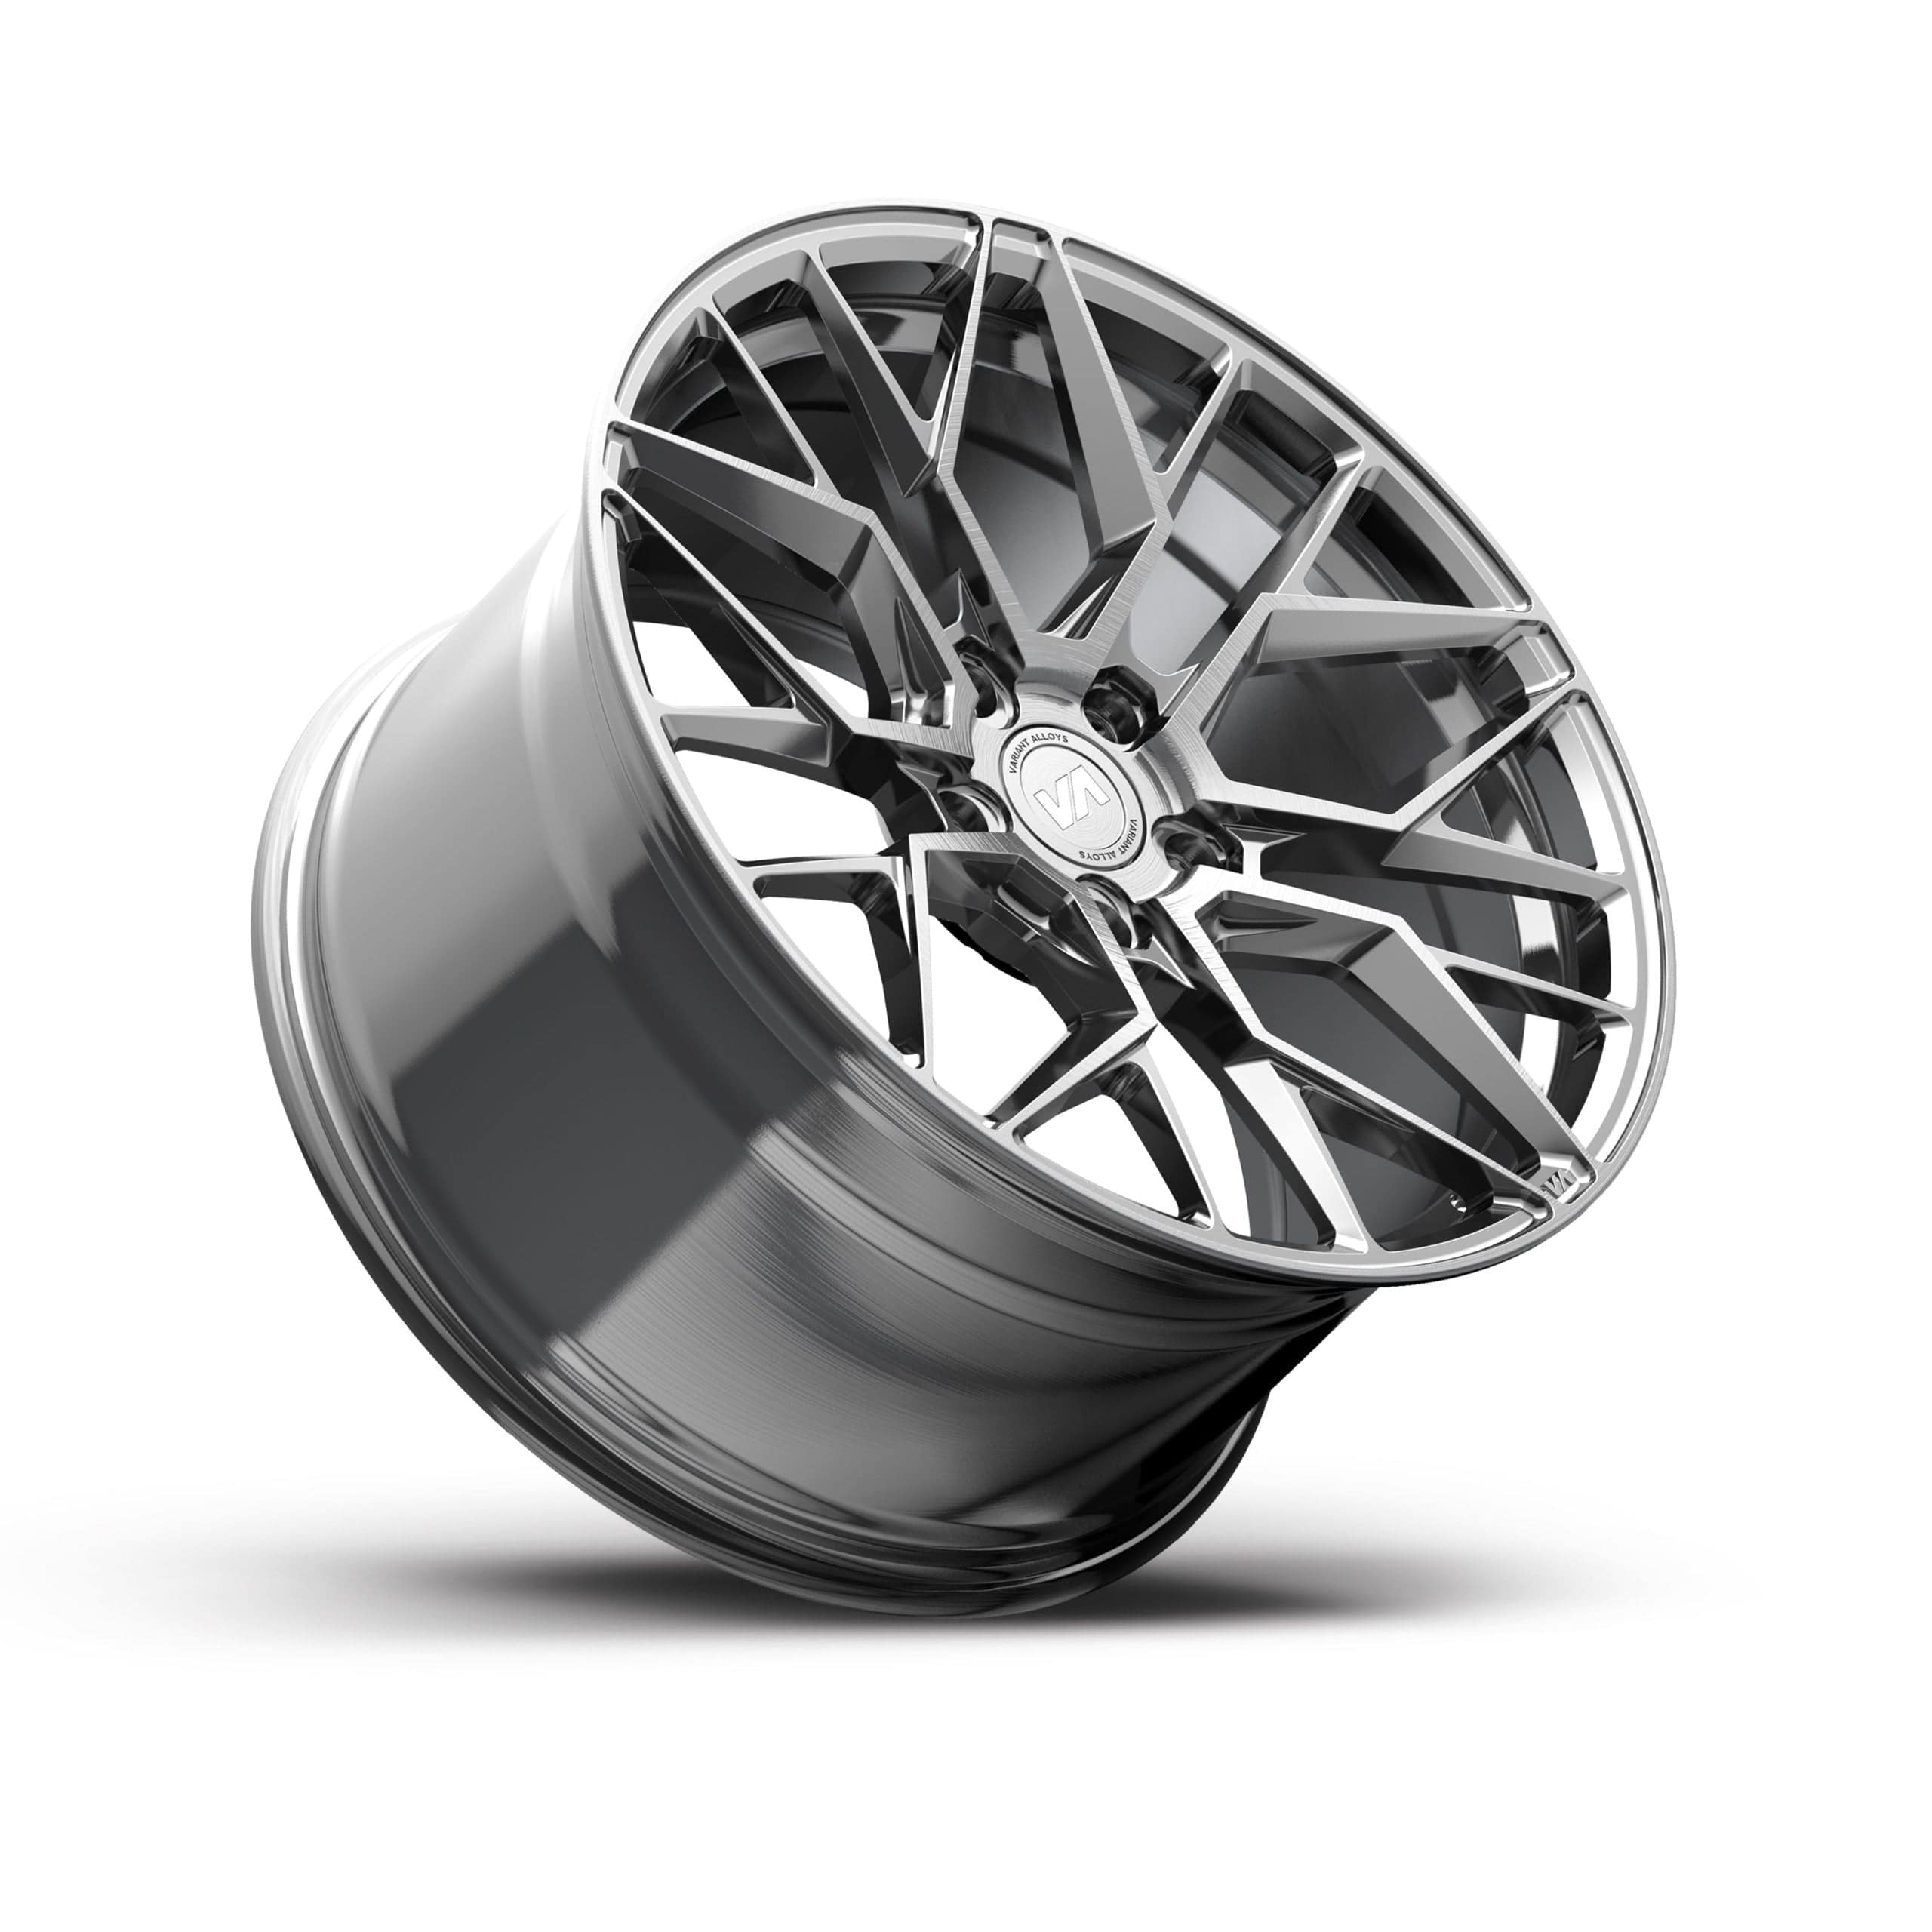 Kies-Motorsports Variant Variant Radon Titanium Brushed Wheels